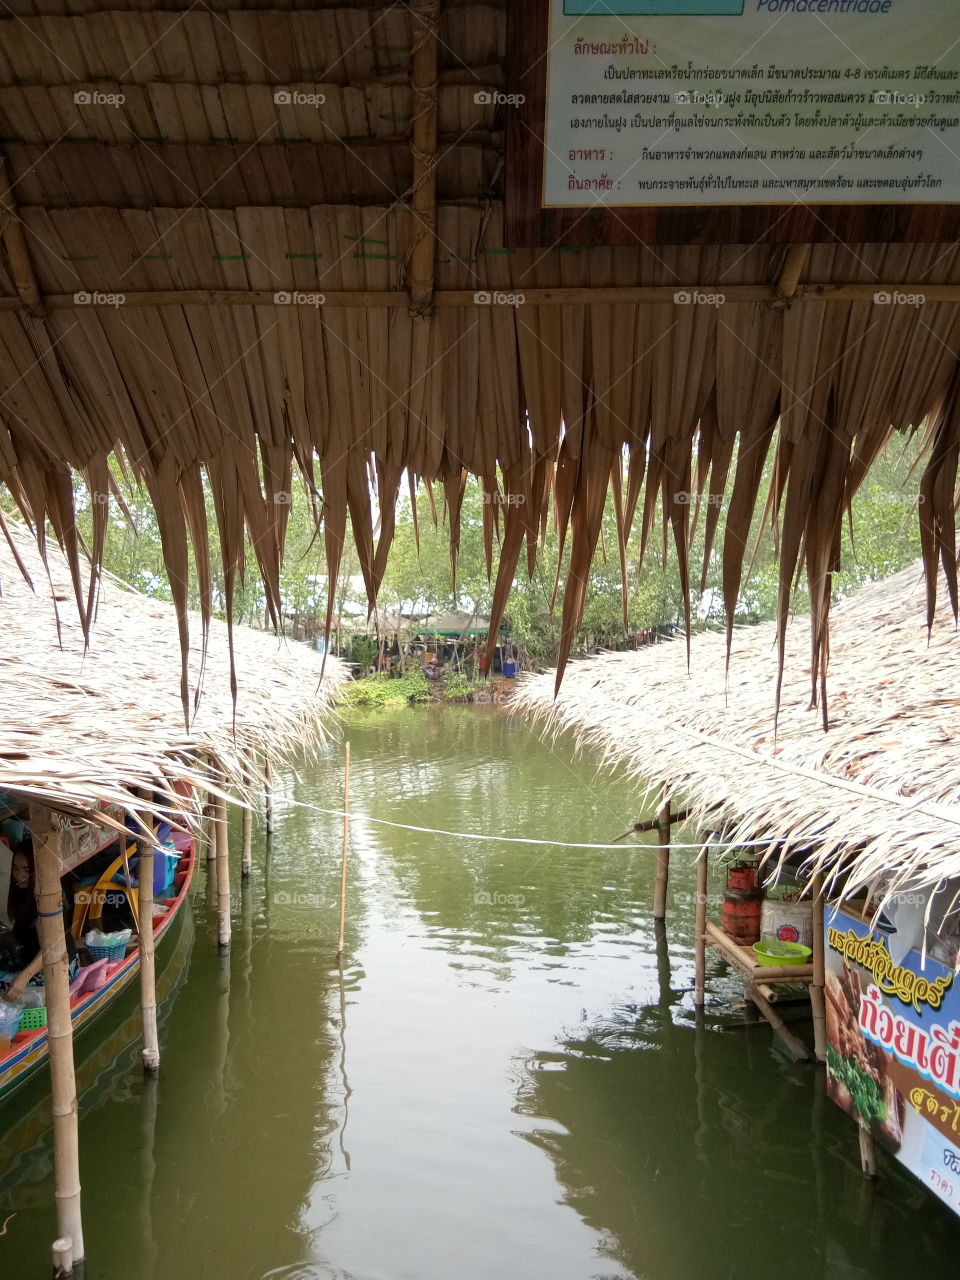 floating market
river
sea
house